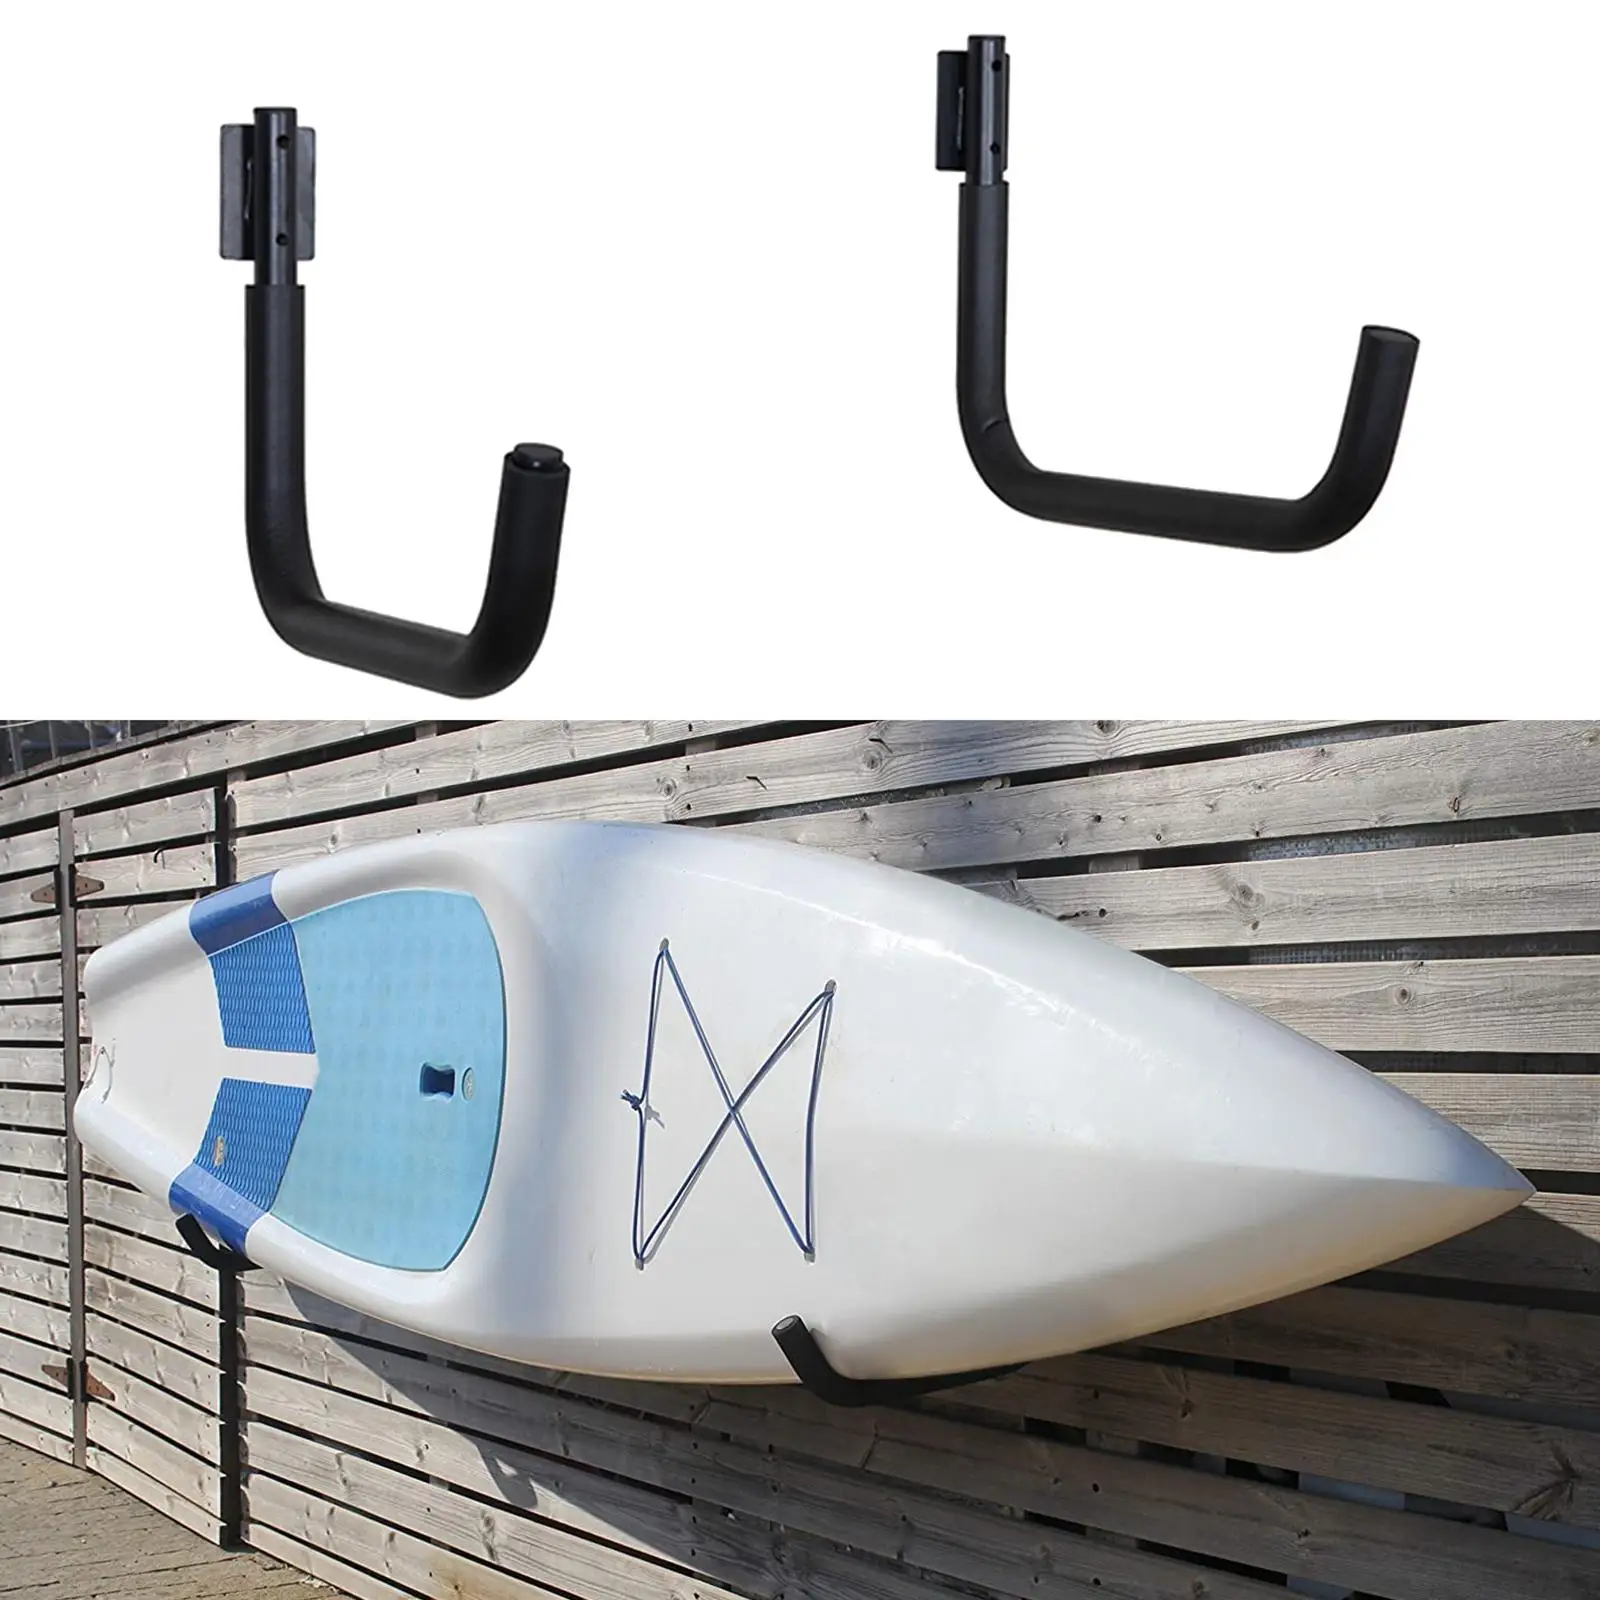 2pc Kayak Storage Rack Hanger Carrier Canoe Paddle Surfboard Holder Wall Bracket 